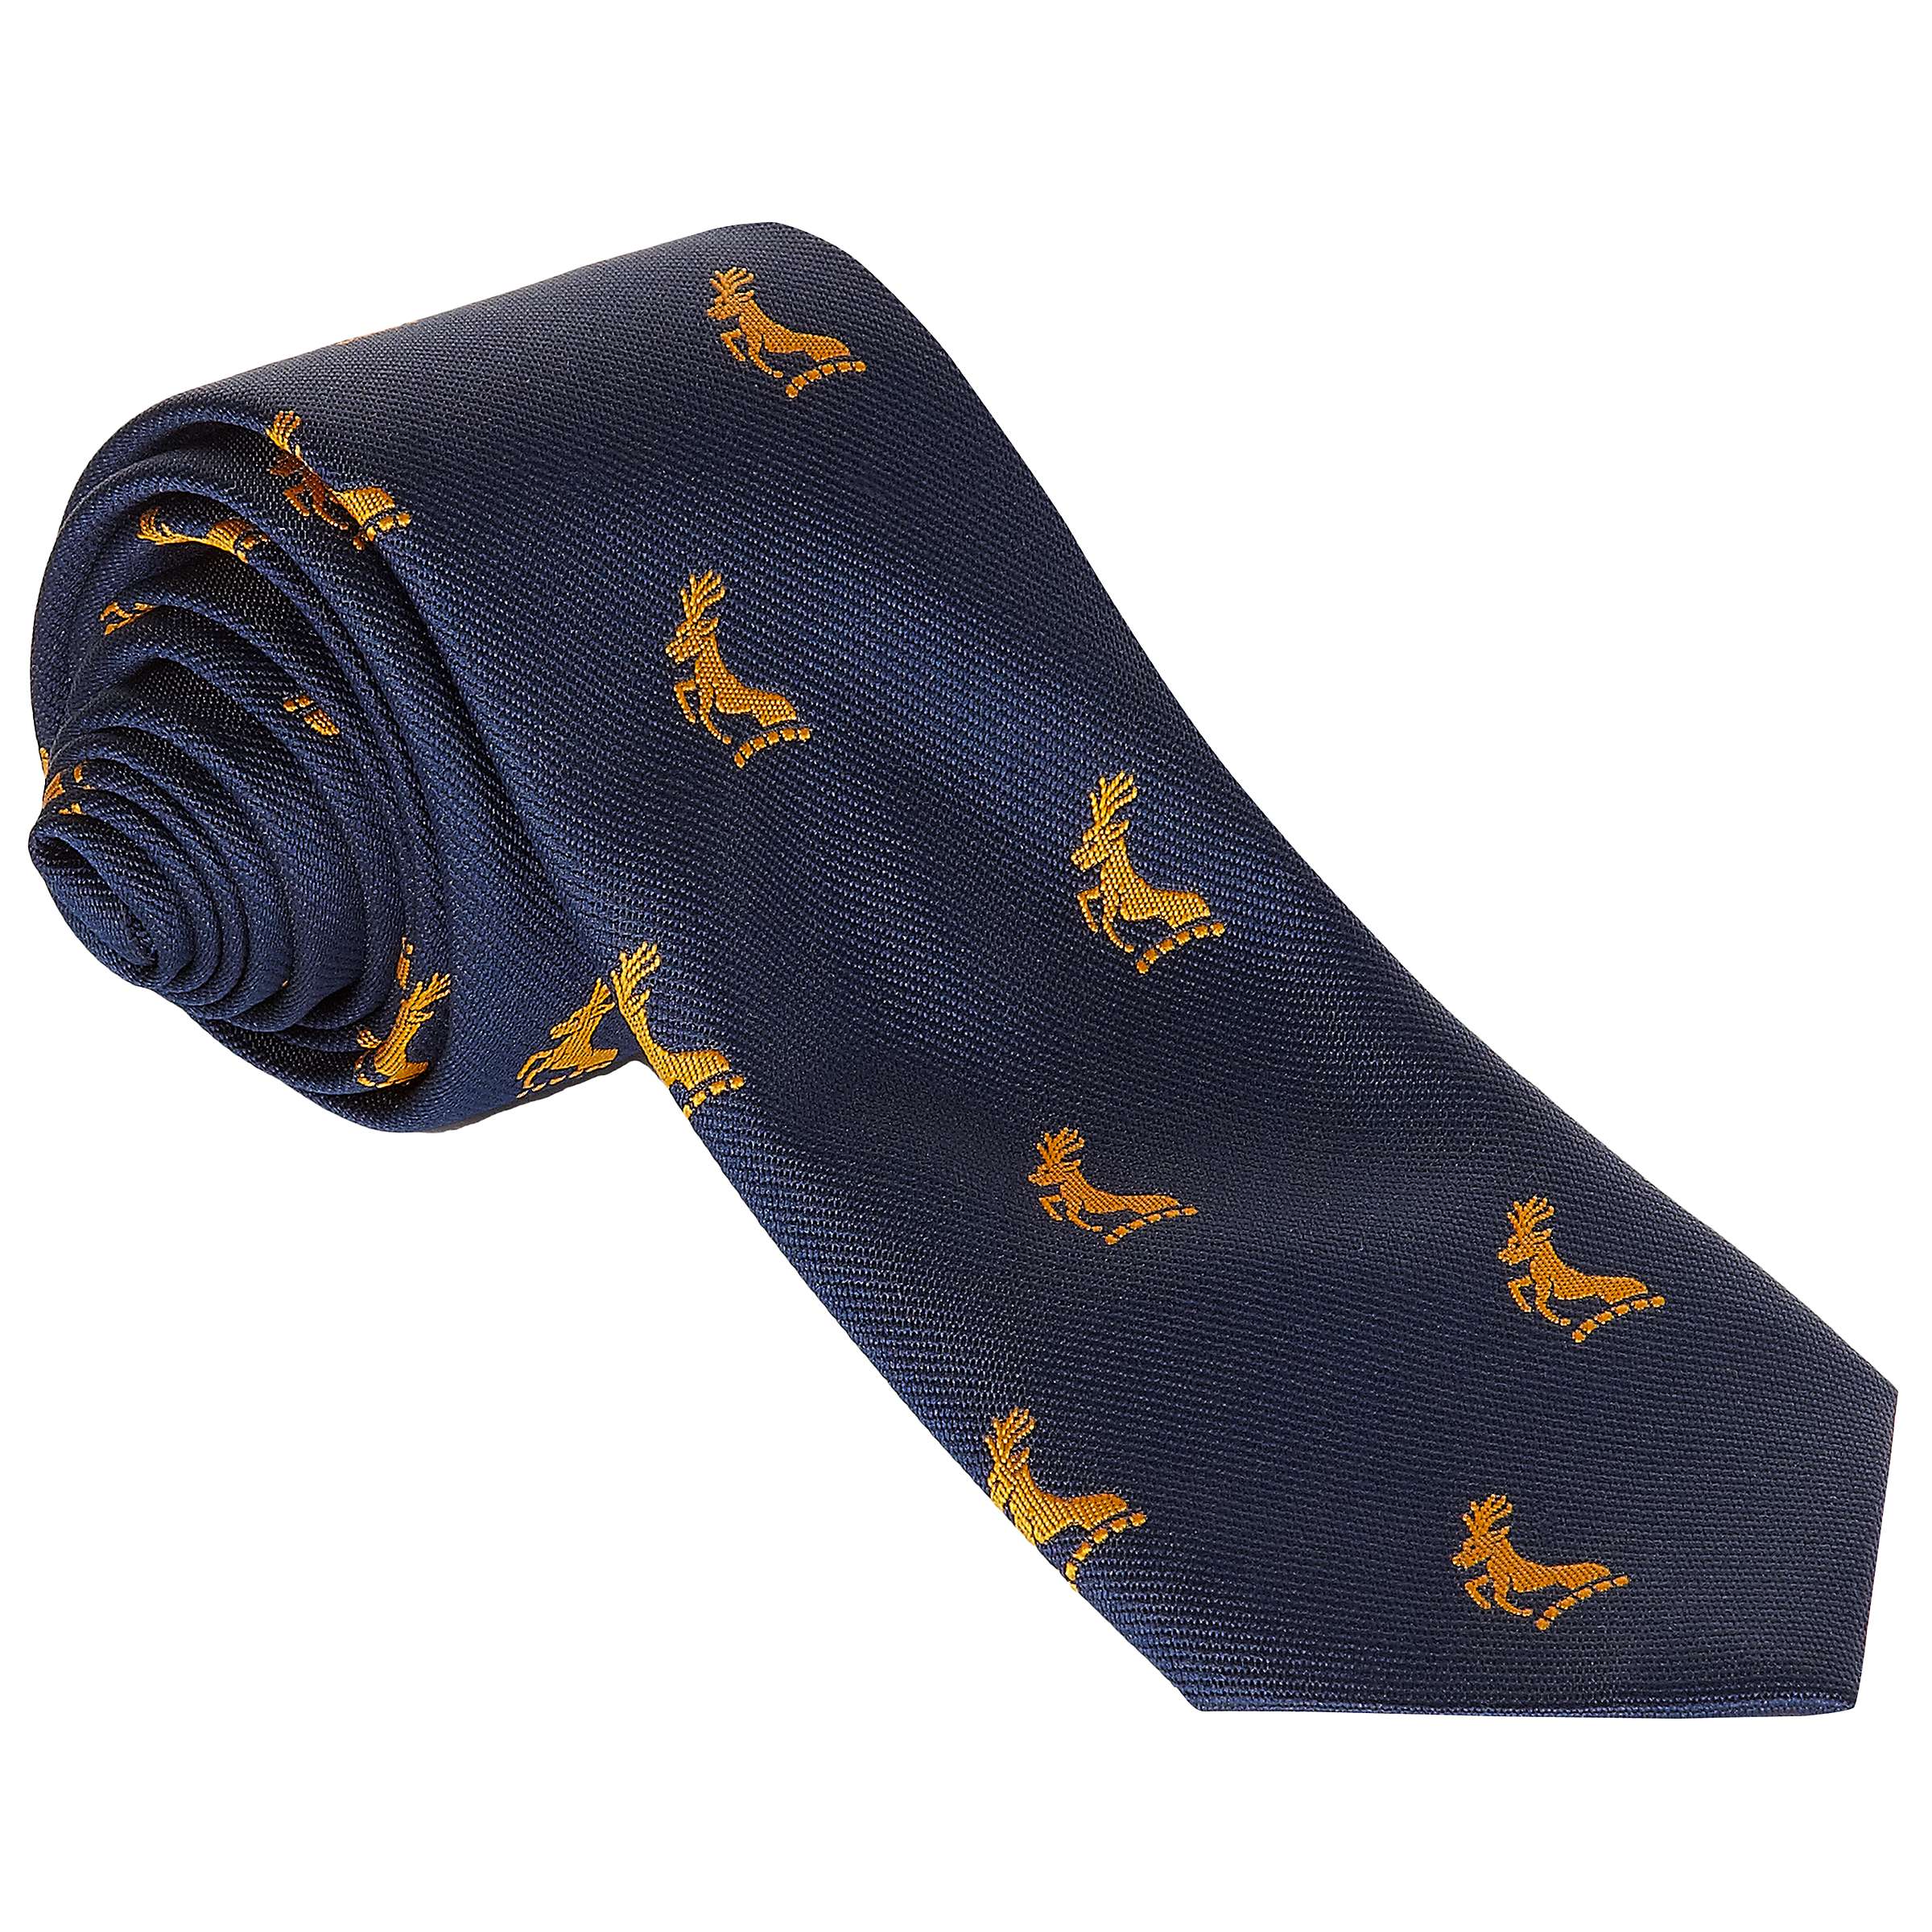 Buy Colfe's School Boys' Jaquard Tie, Navy Blue Online at johnlewis.com